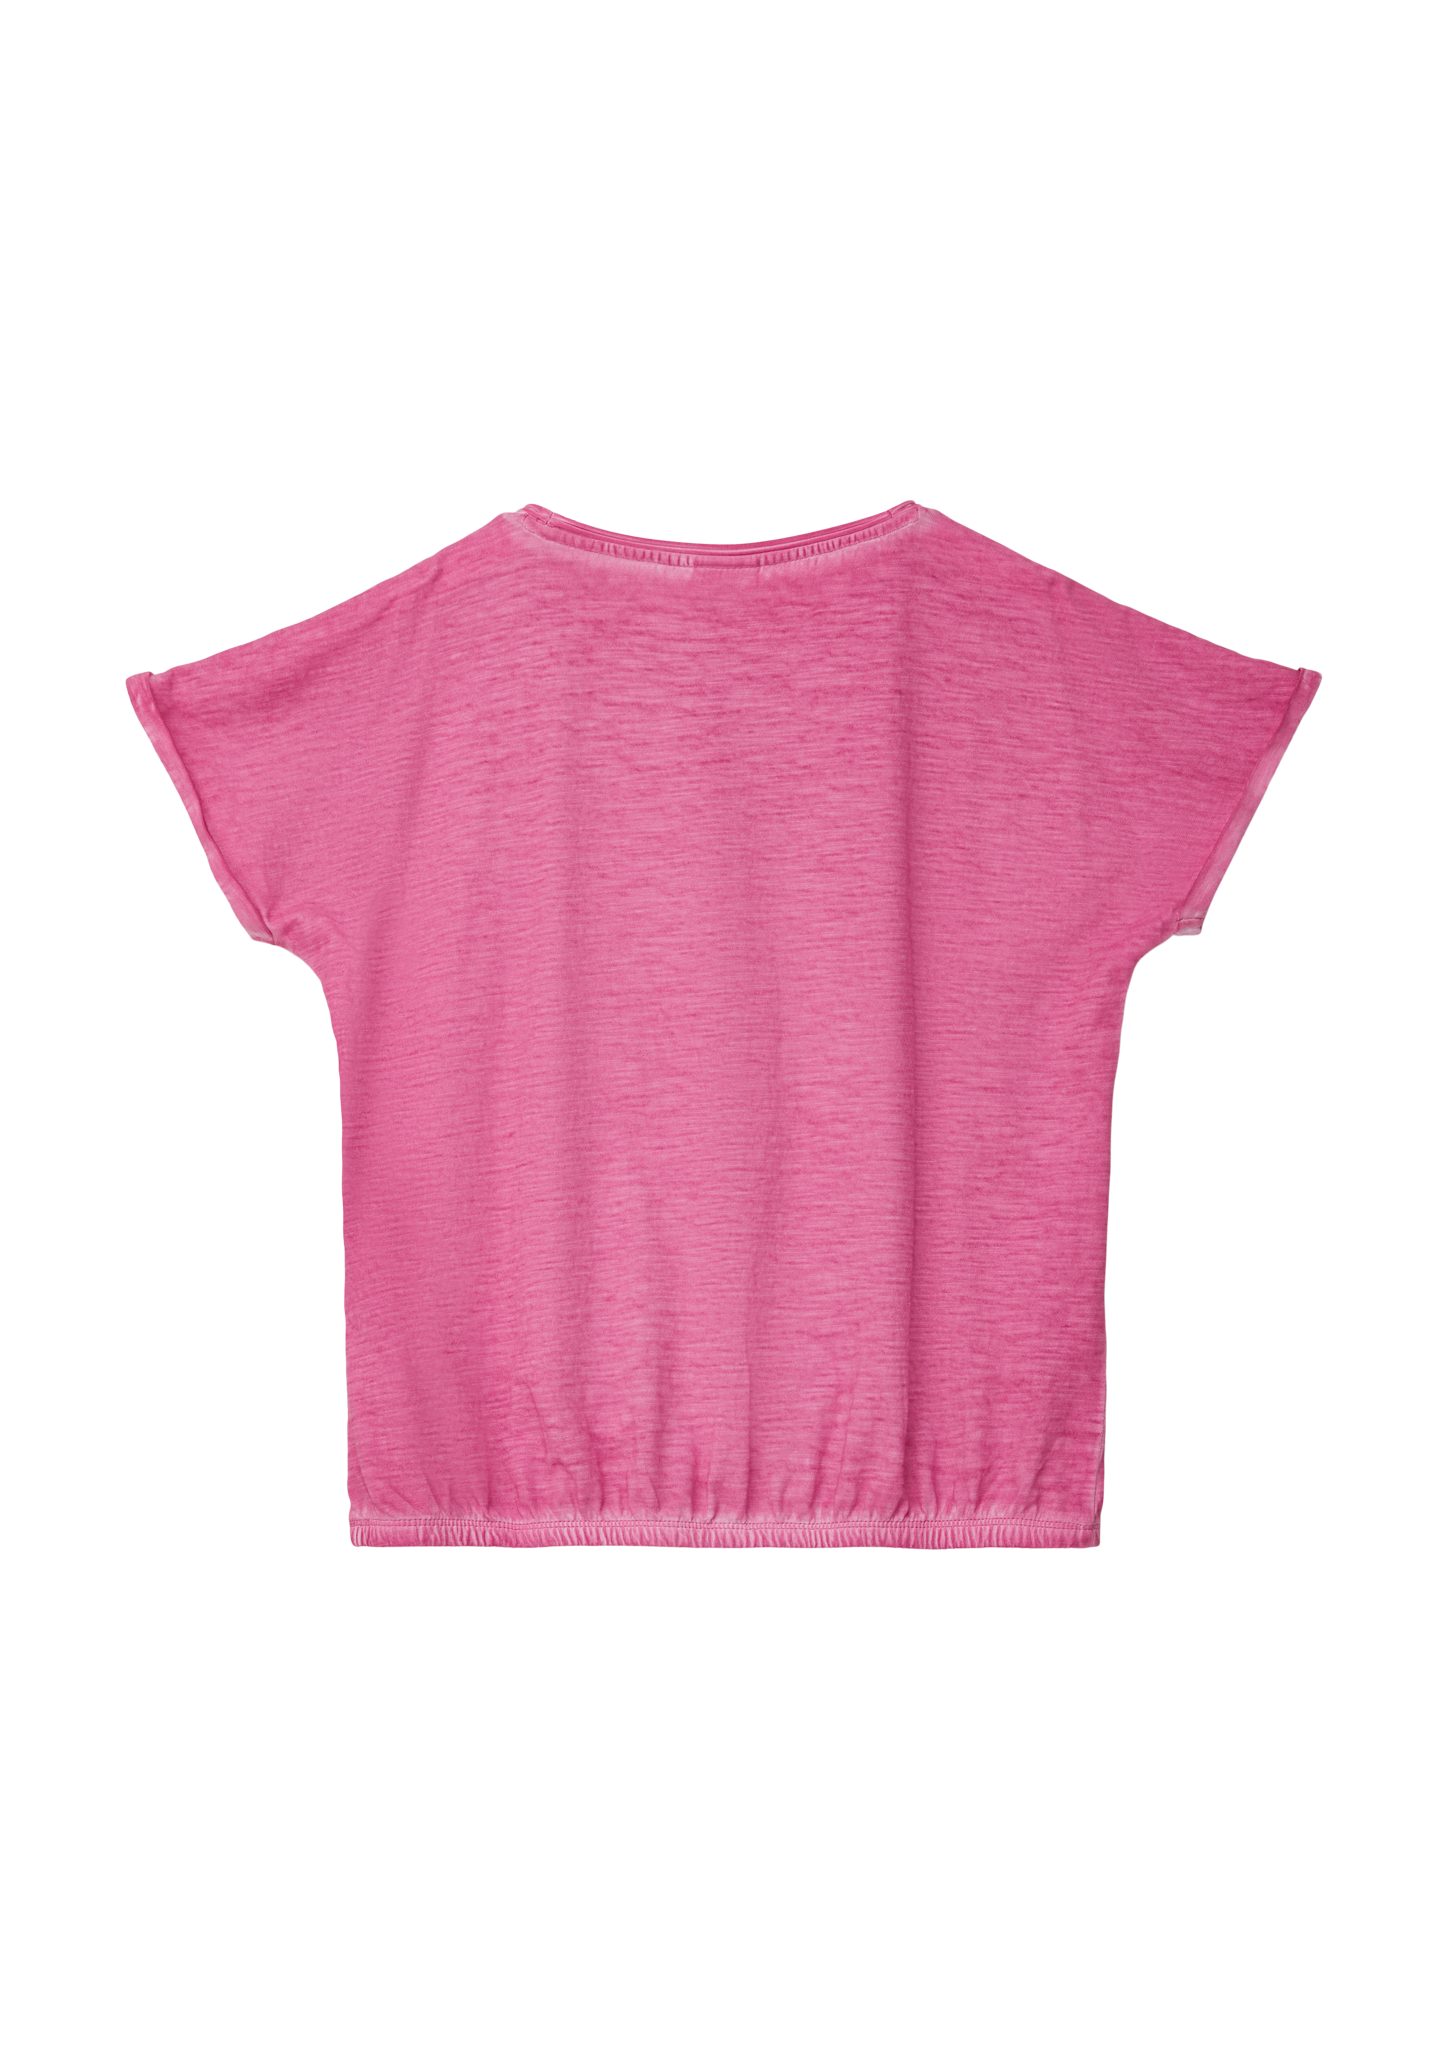 Kurzarmshirt T-Shirt s.Oliver Baumwolle aus pink